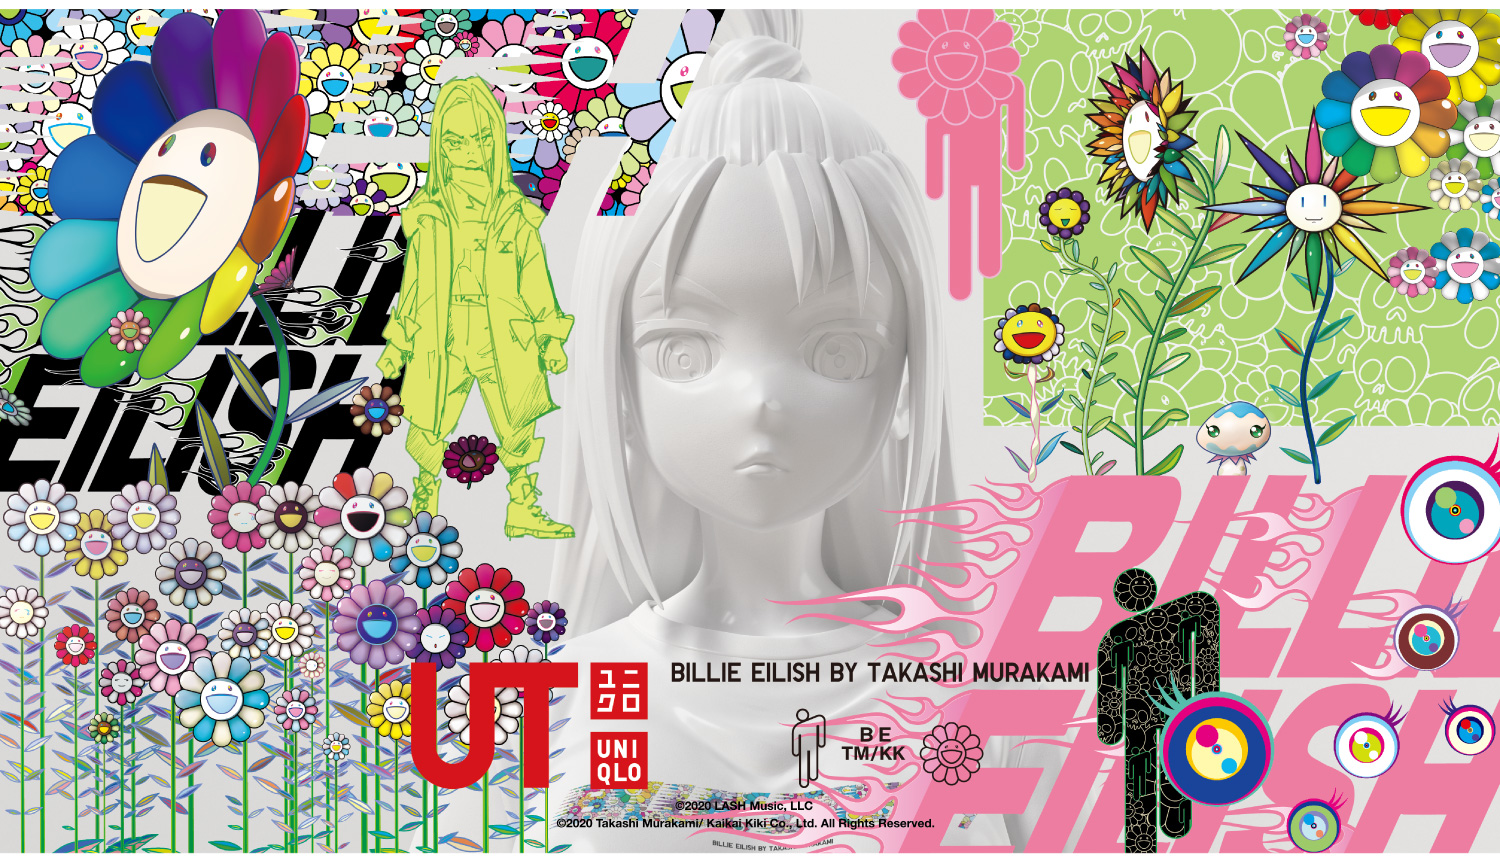 Artist Takashi Murakami and New Era to Release First Collaboration